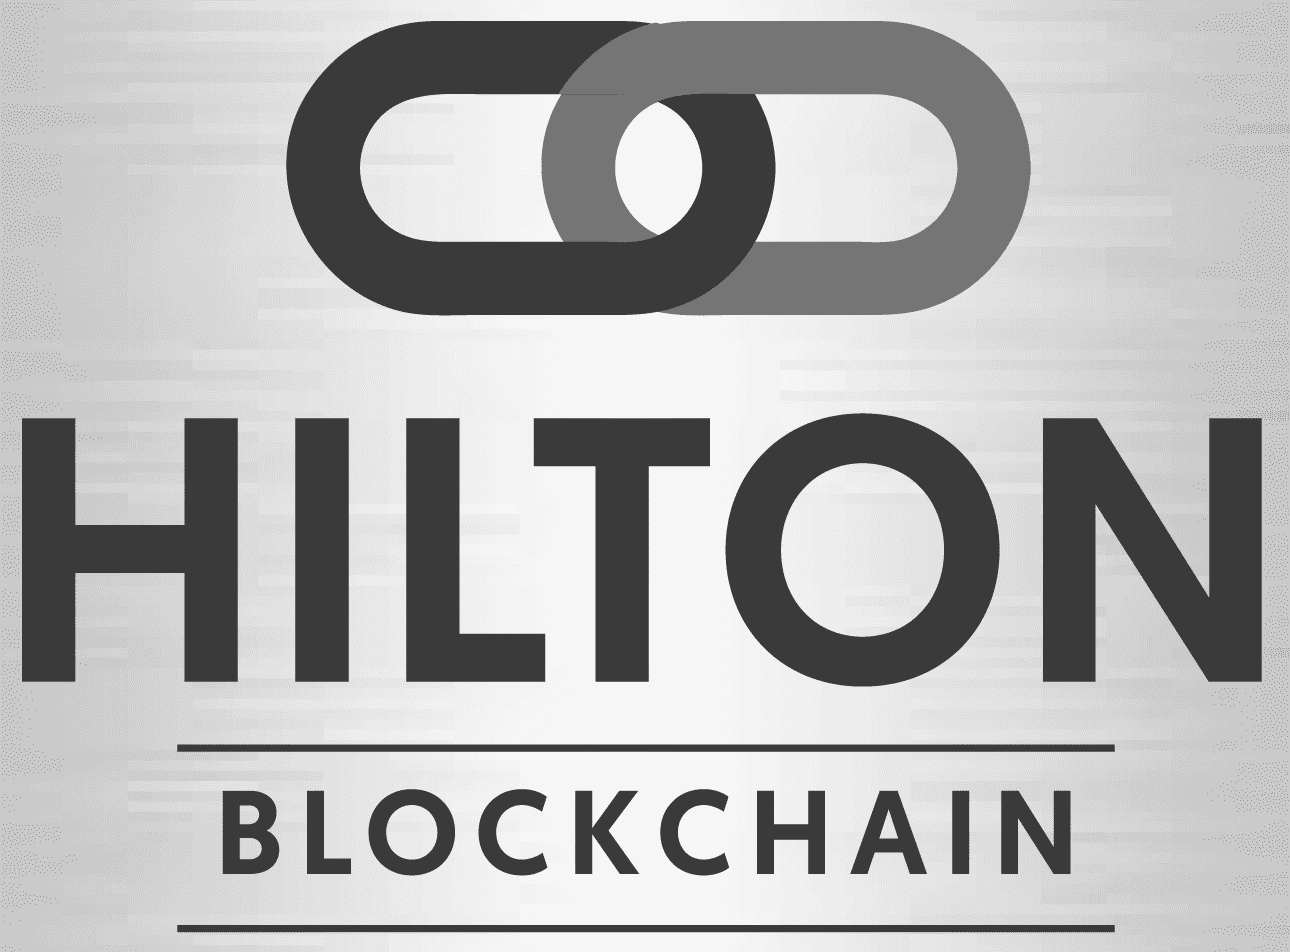 J. Bradley Hilton from Hilton Blockchain Headshot Photo at Small Business Expo